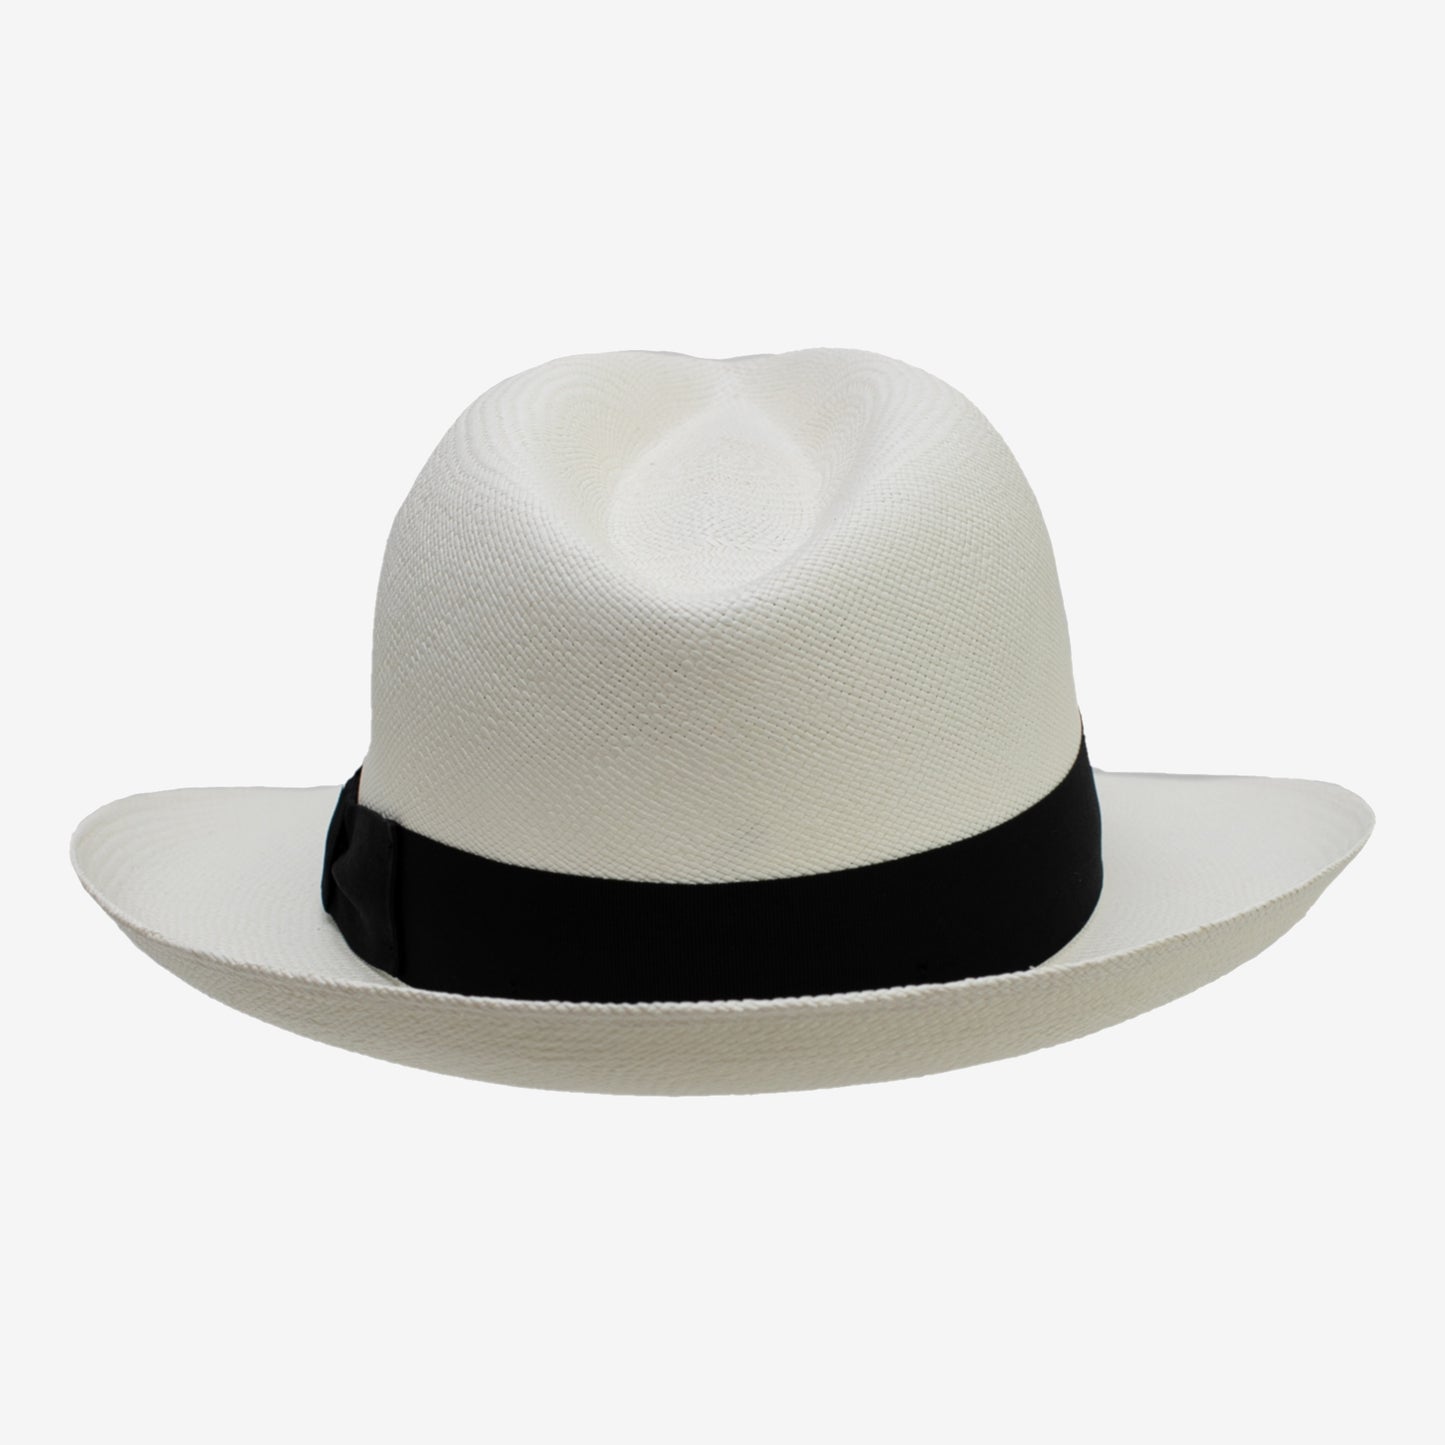 mindo-hats-the-don-galo-classic-straw-panama-hat-white-back